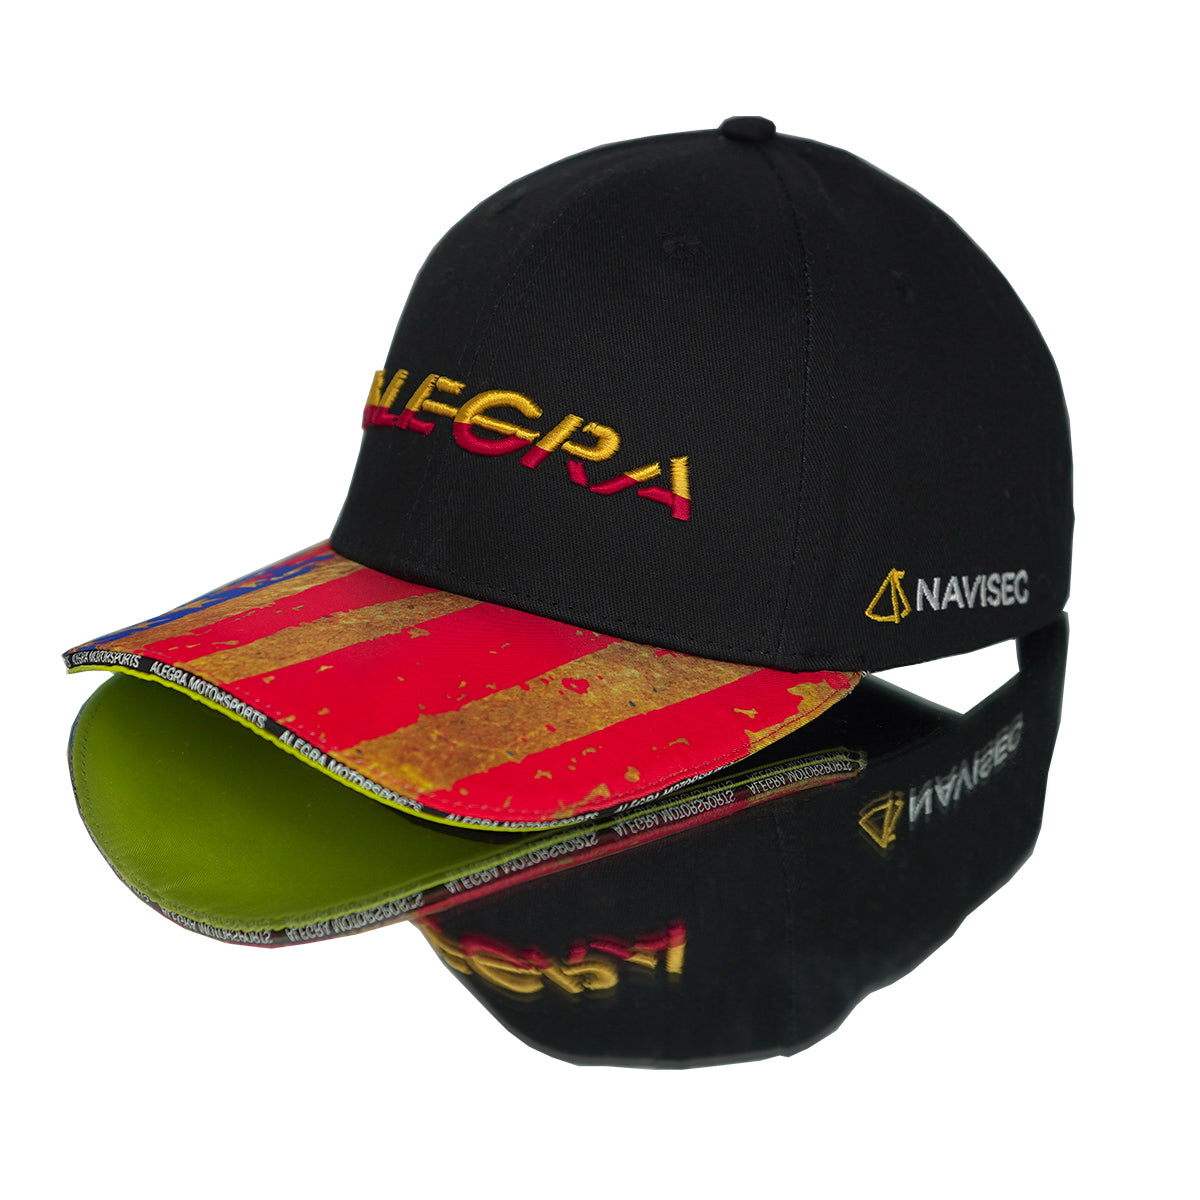 Alegra Motorsports team snapback hat with usa flag printed on the top brim and Navisec sponsor logo